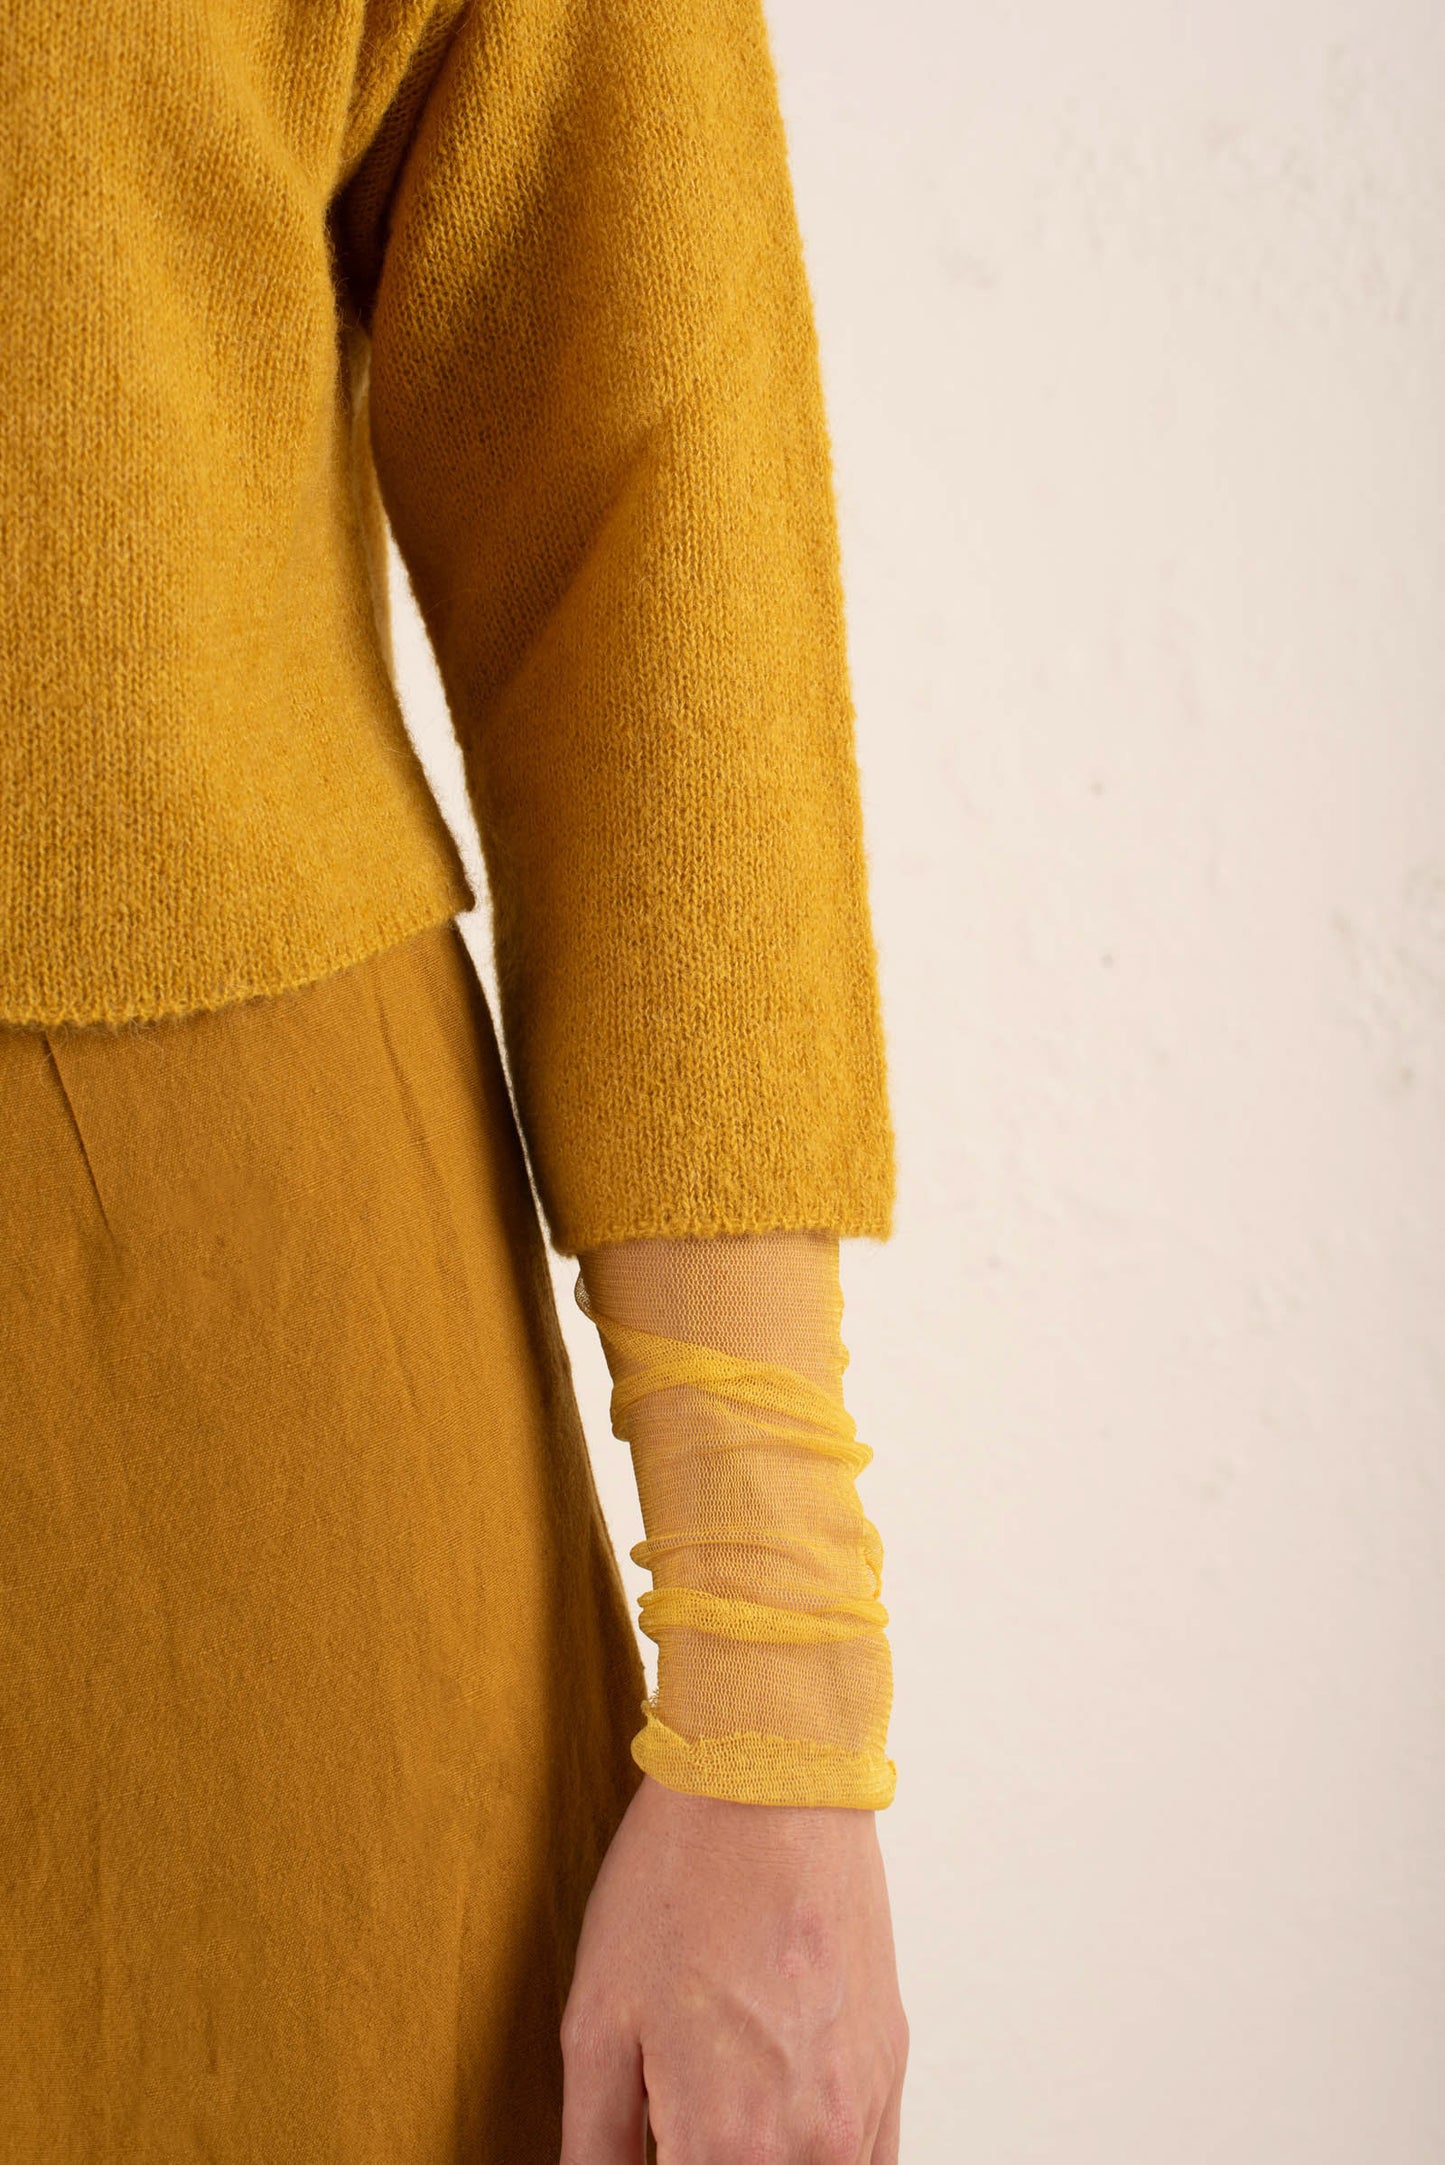 Mar, yellow knitwear cardigan in alpaca, cashmere and silk